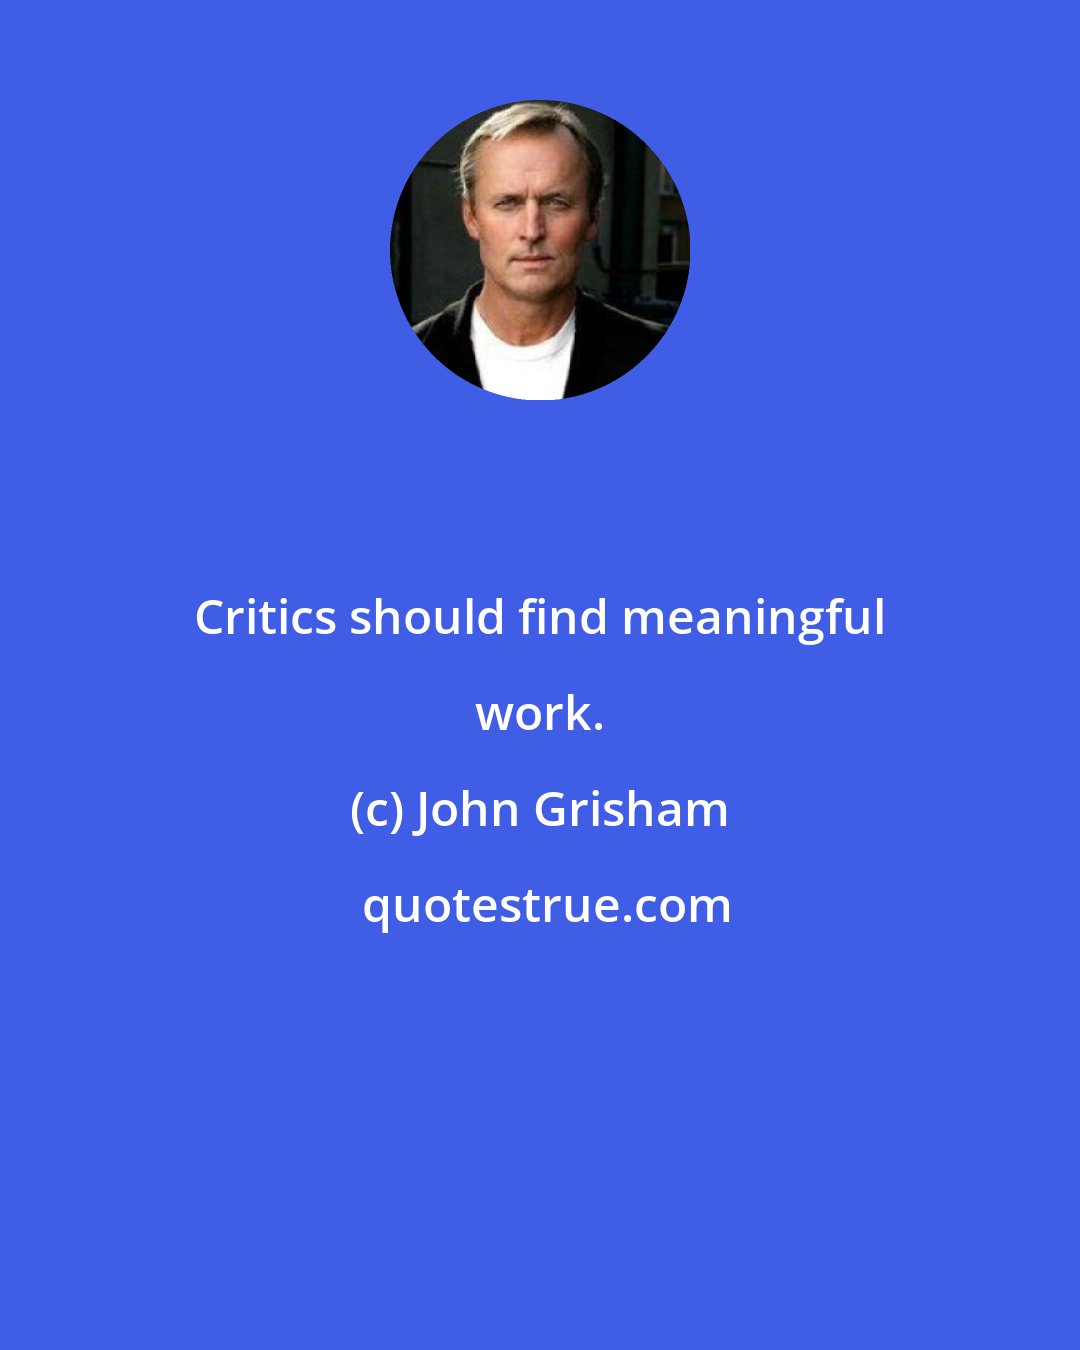 John Grisham: Critics should find meaningful work.